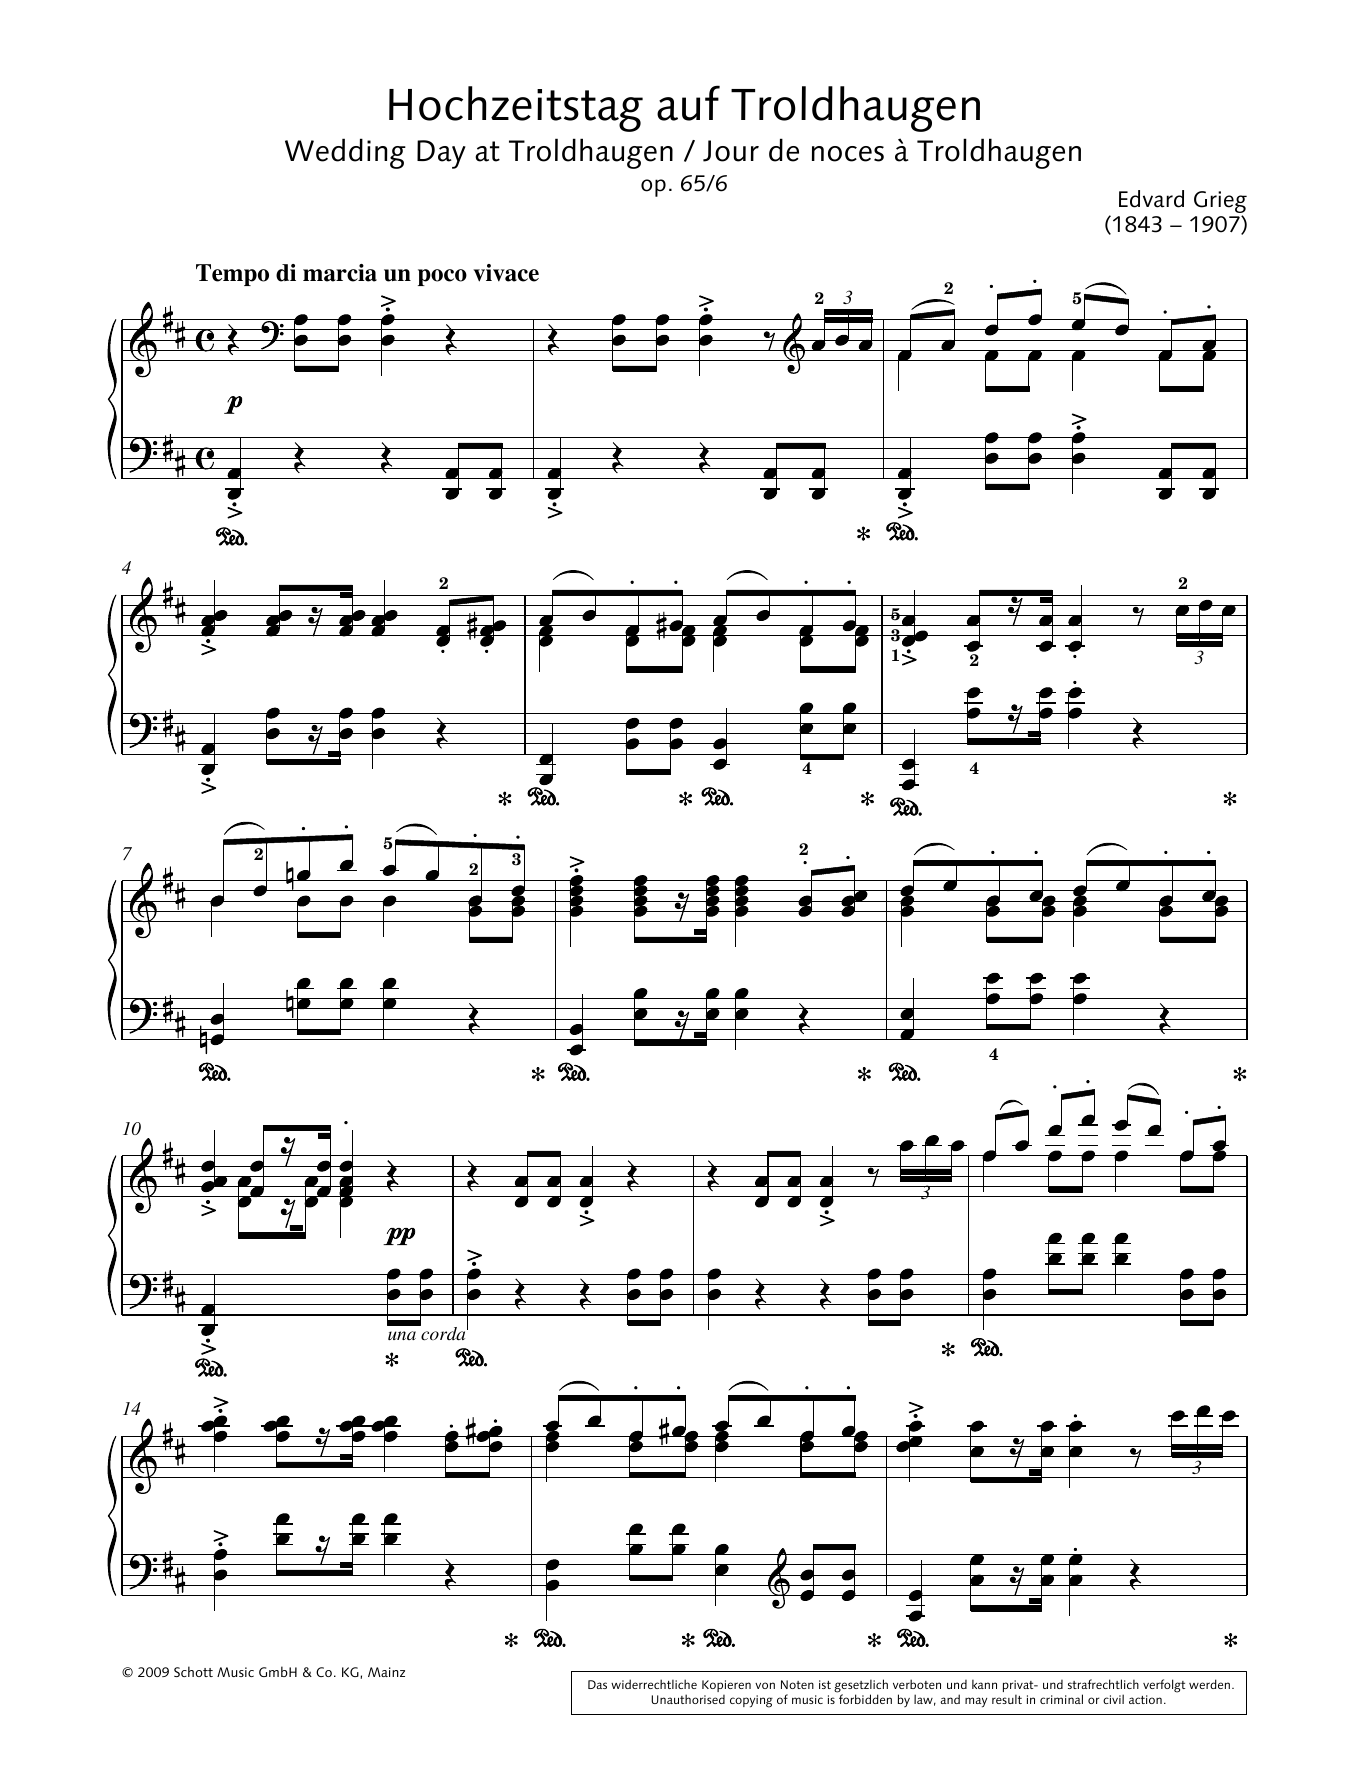 Edvard Grieg Wedding Day at Troldhaugen (arr. Hans-Gunter Heumann) Sheet Music Notes & Chords for Piano Solo - Download or Print PDF